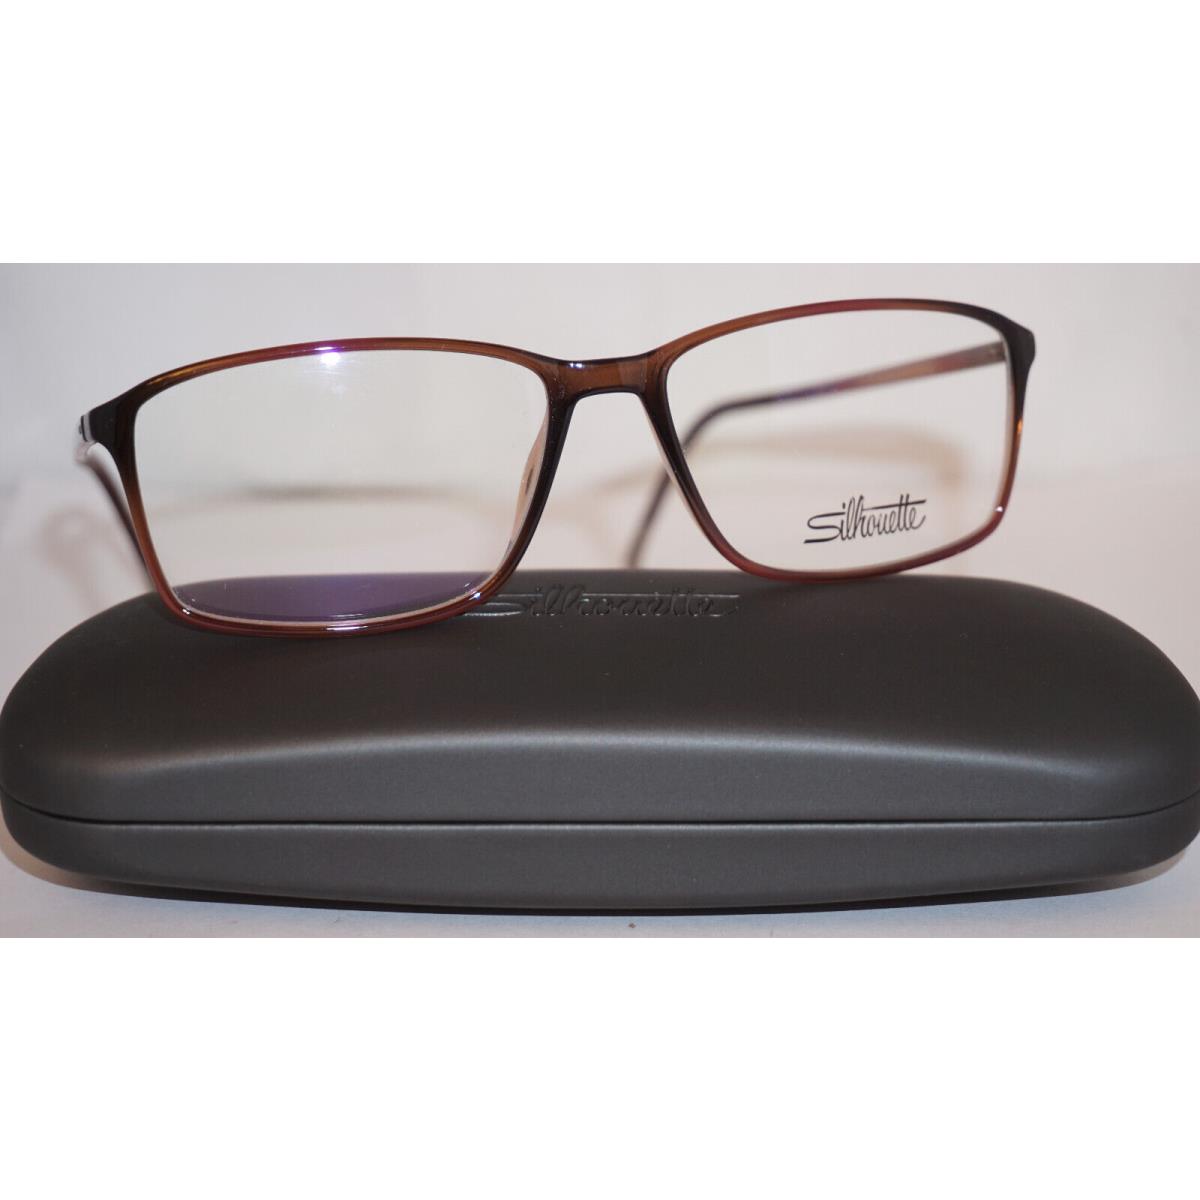 Silhouette RX Eyeglasses Brown Spx 2893 10 6122 56 15 145 